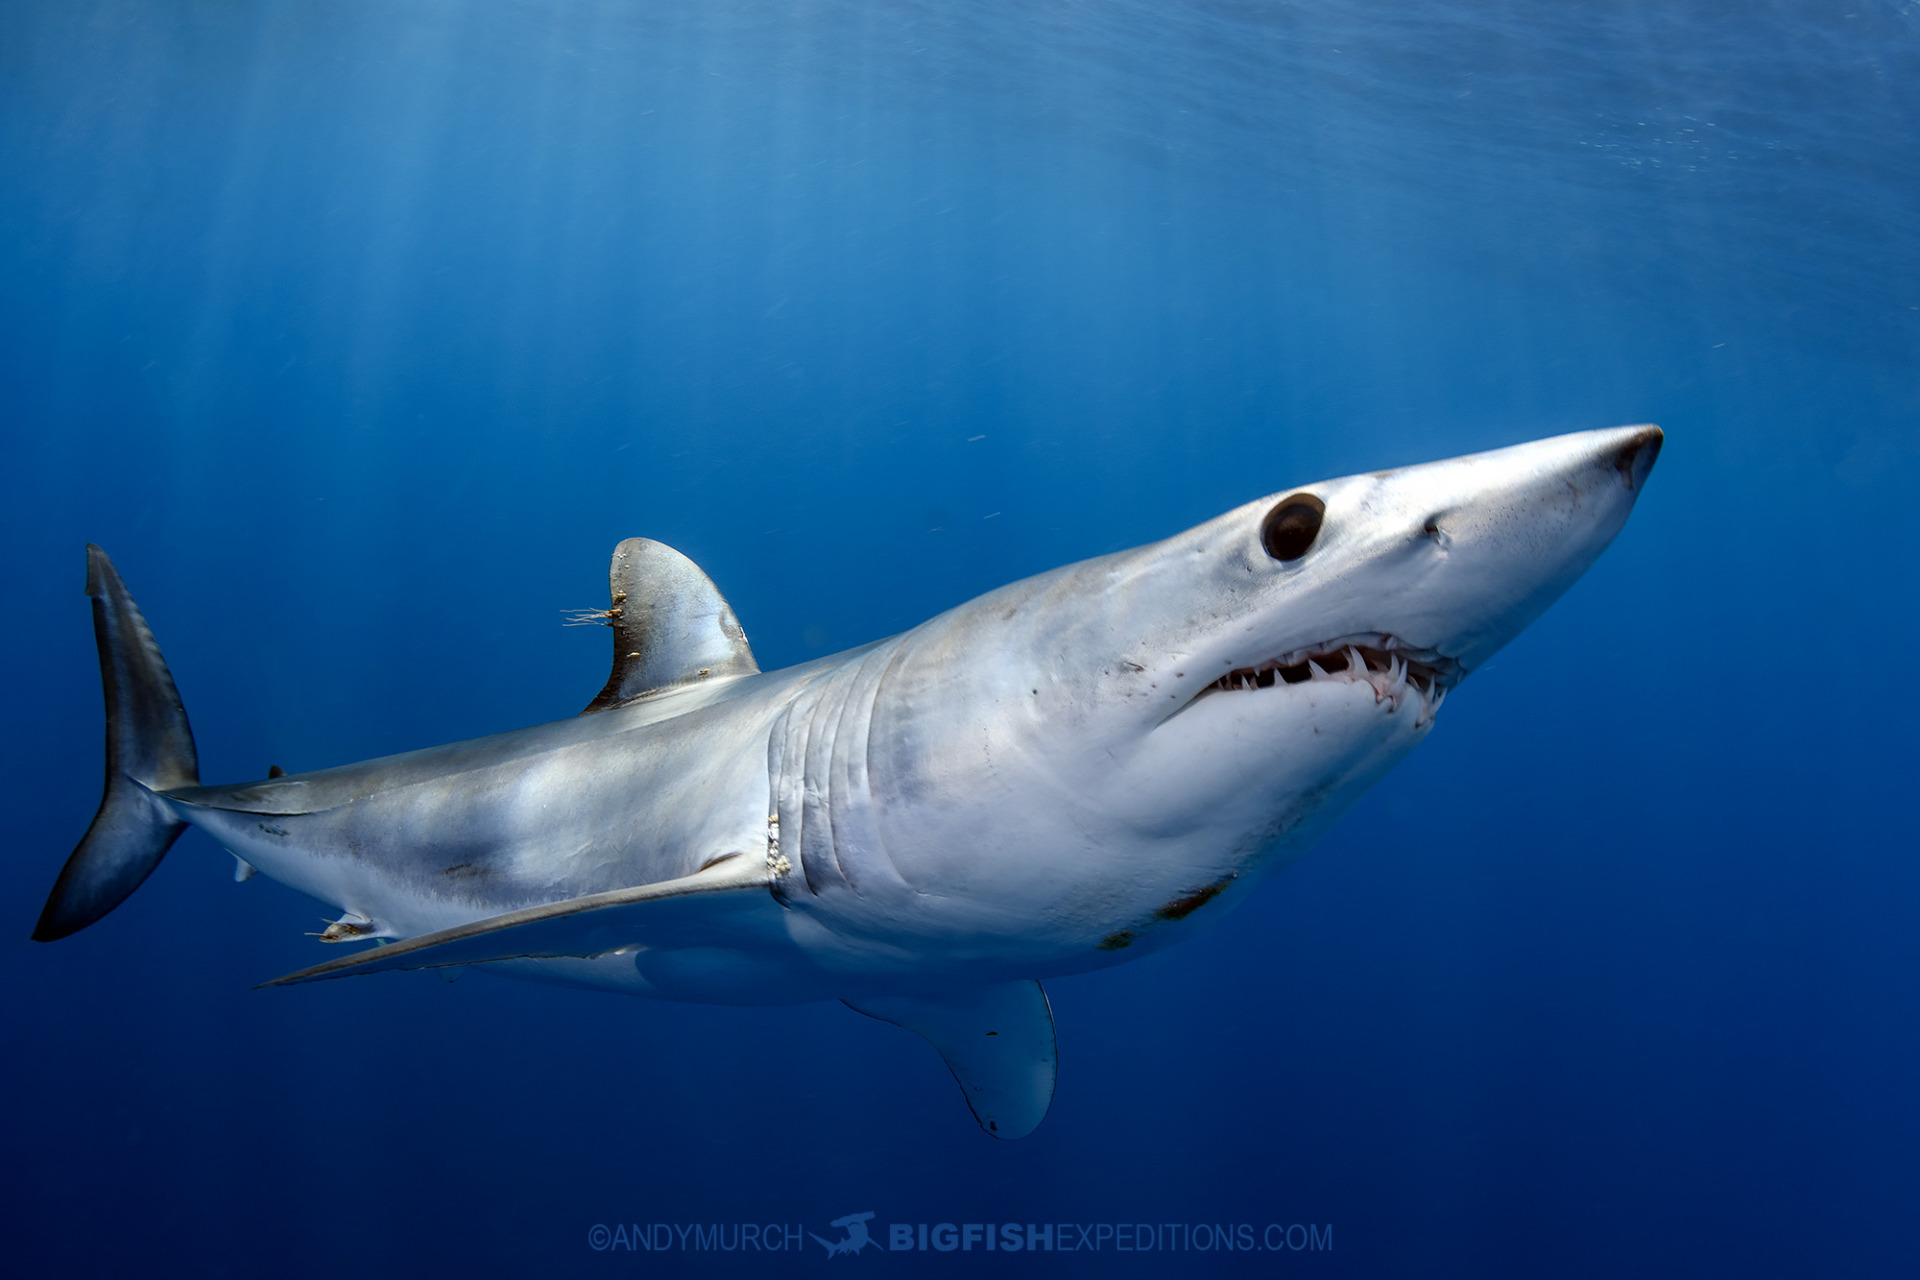 Mako shark photography tips for underwater photographers.